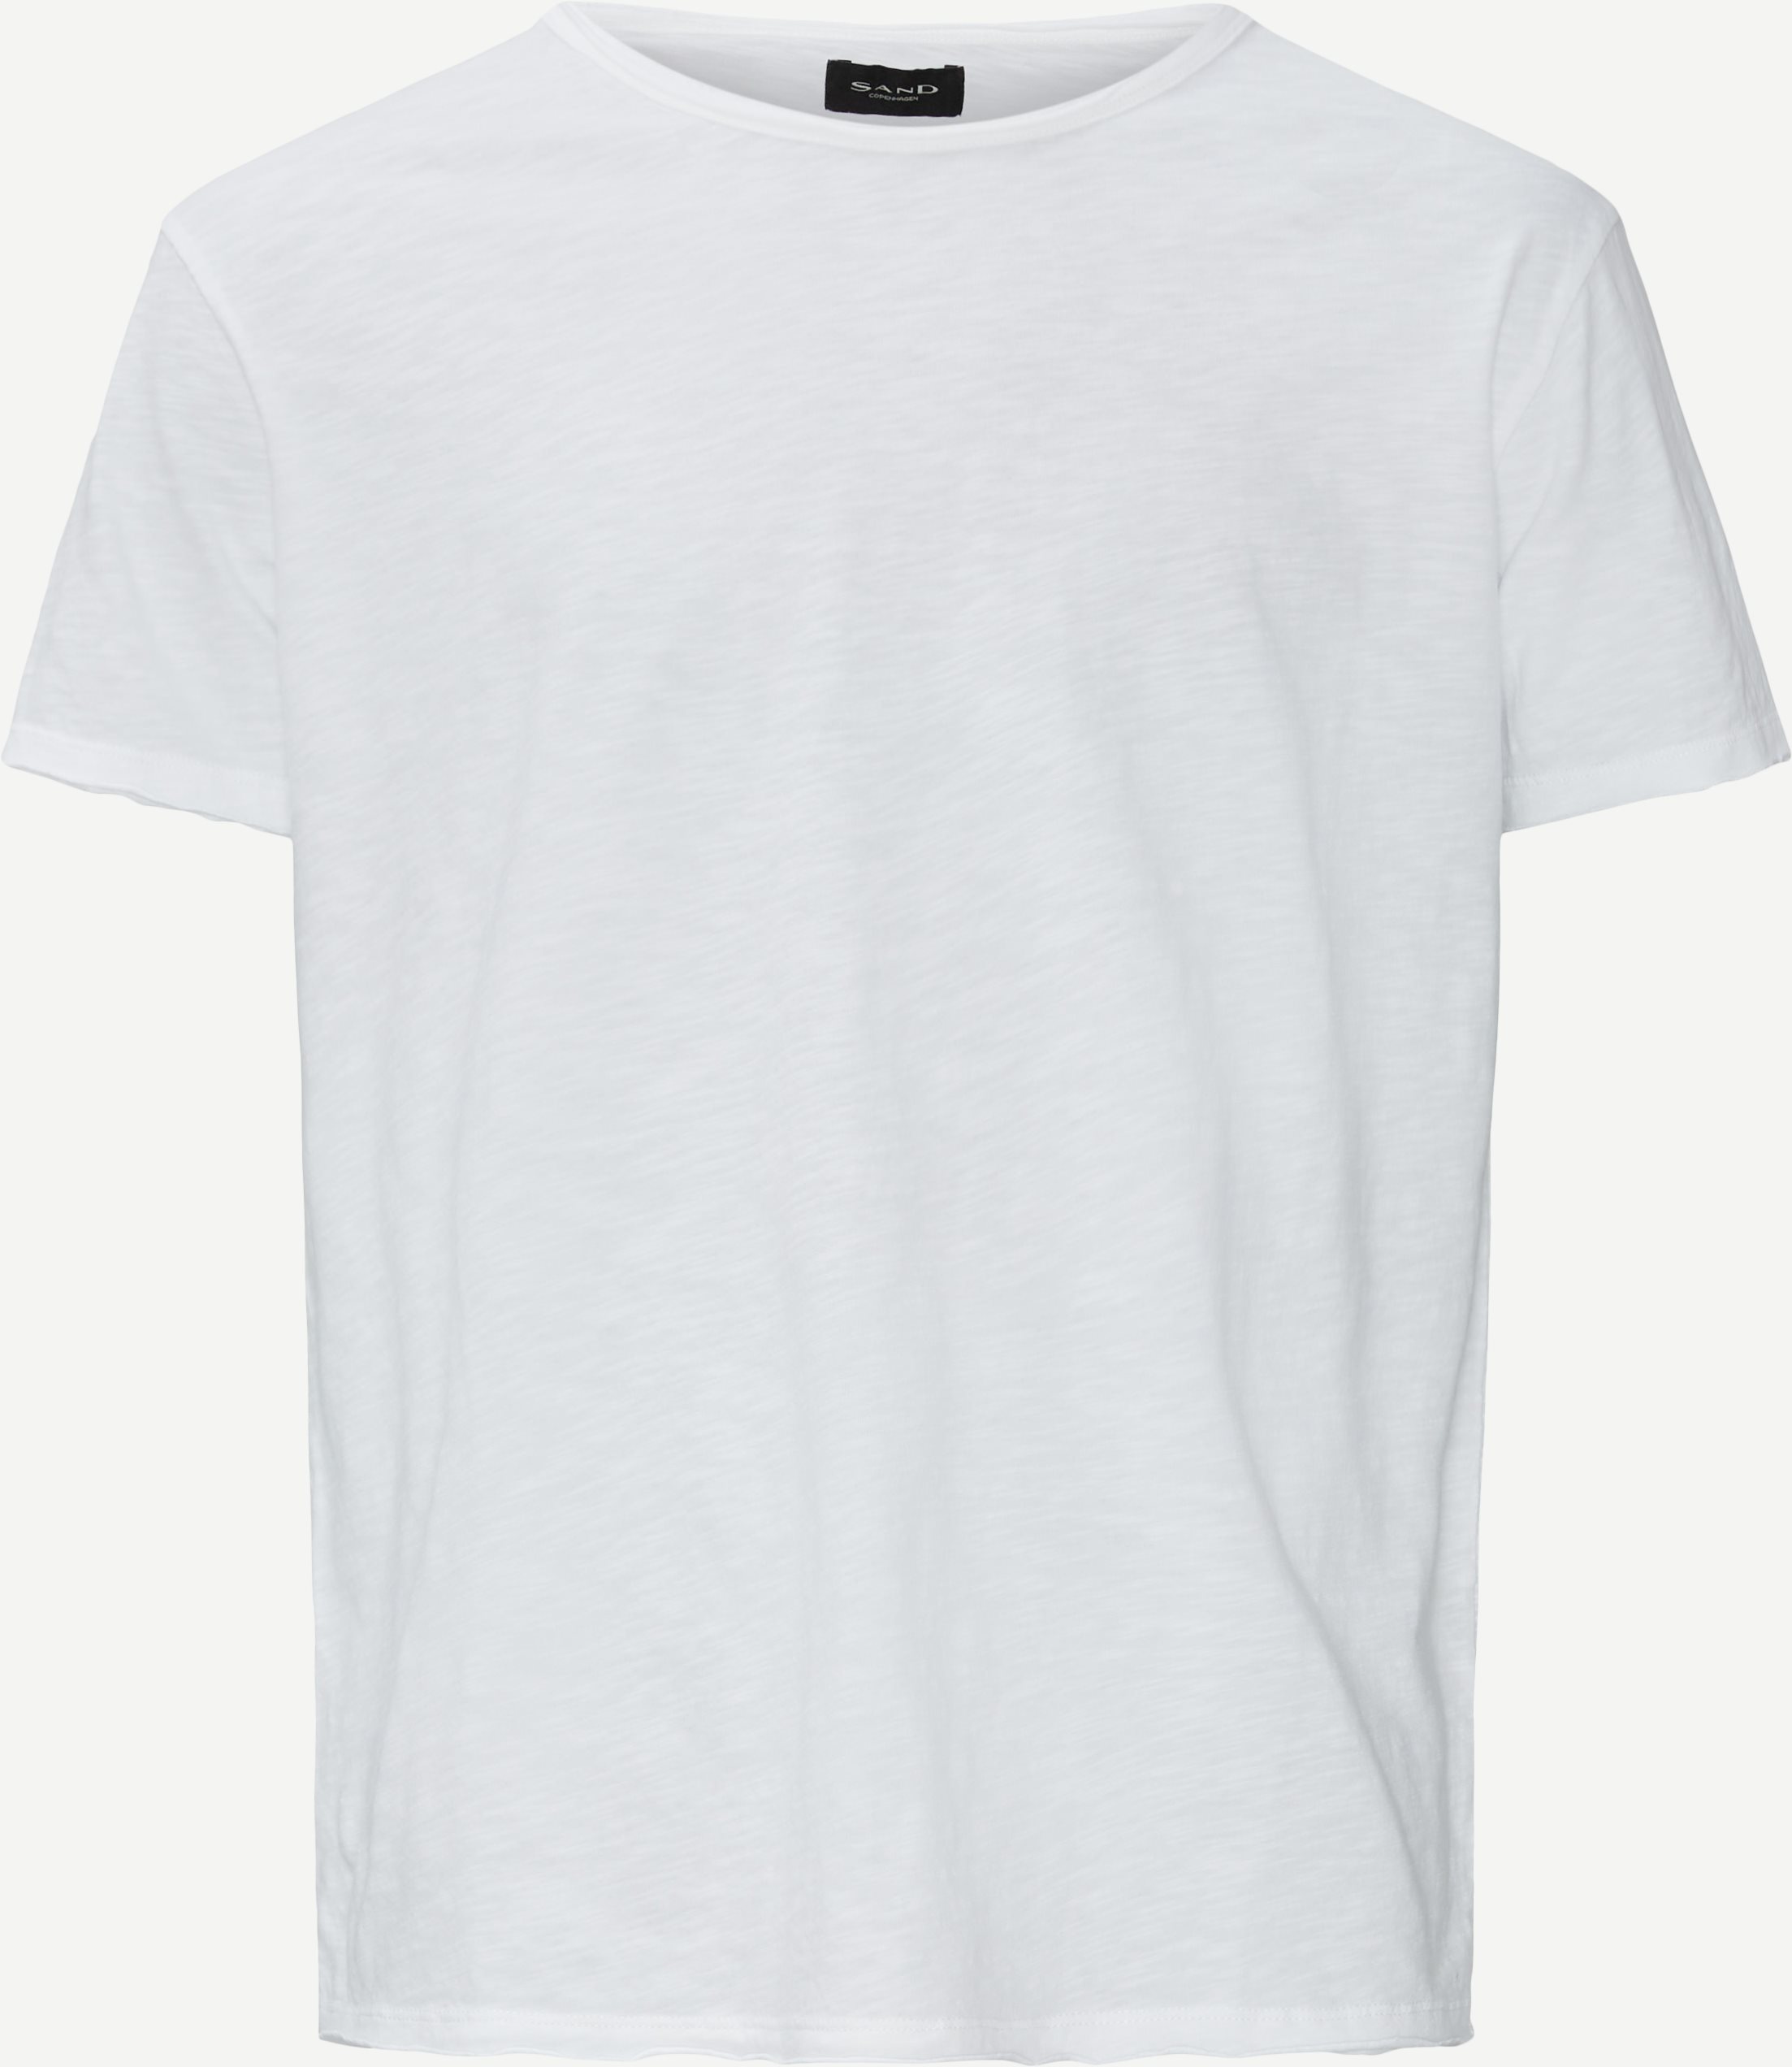 4829 Brad O T-shirt - T-shirts - Regular fit - Hvid